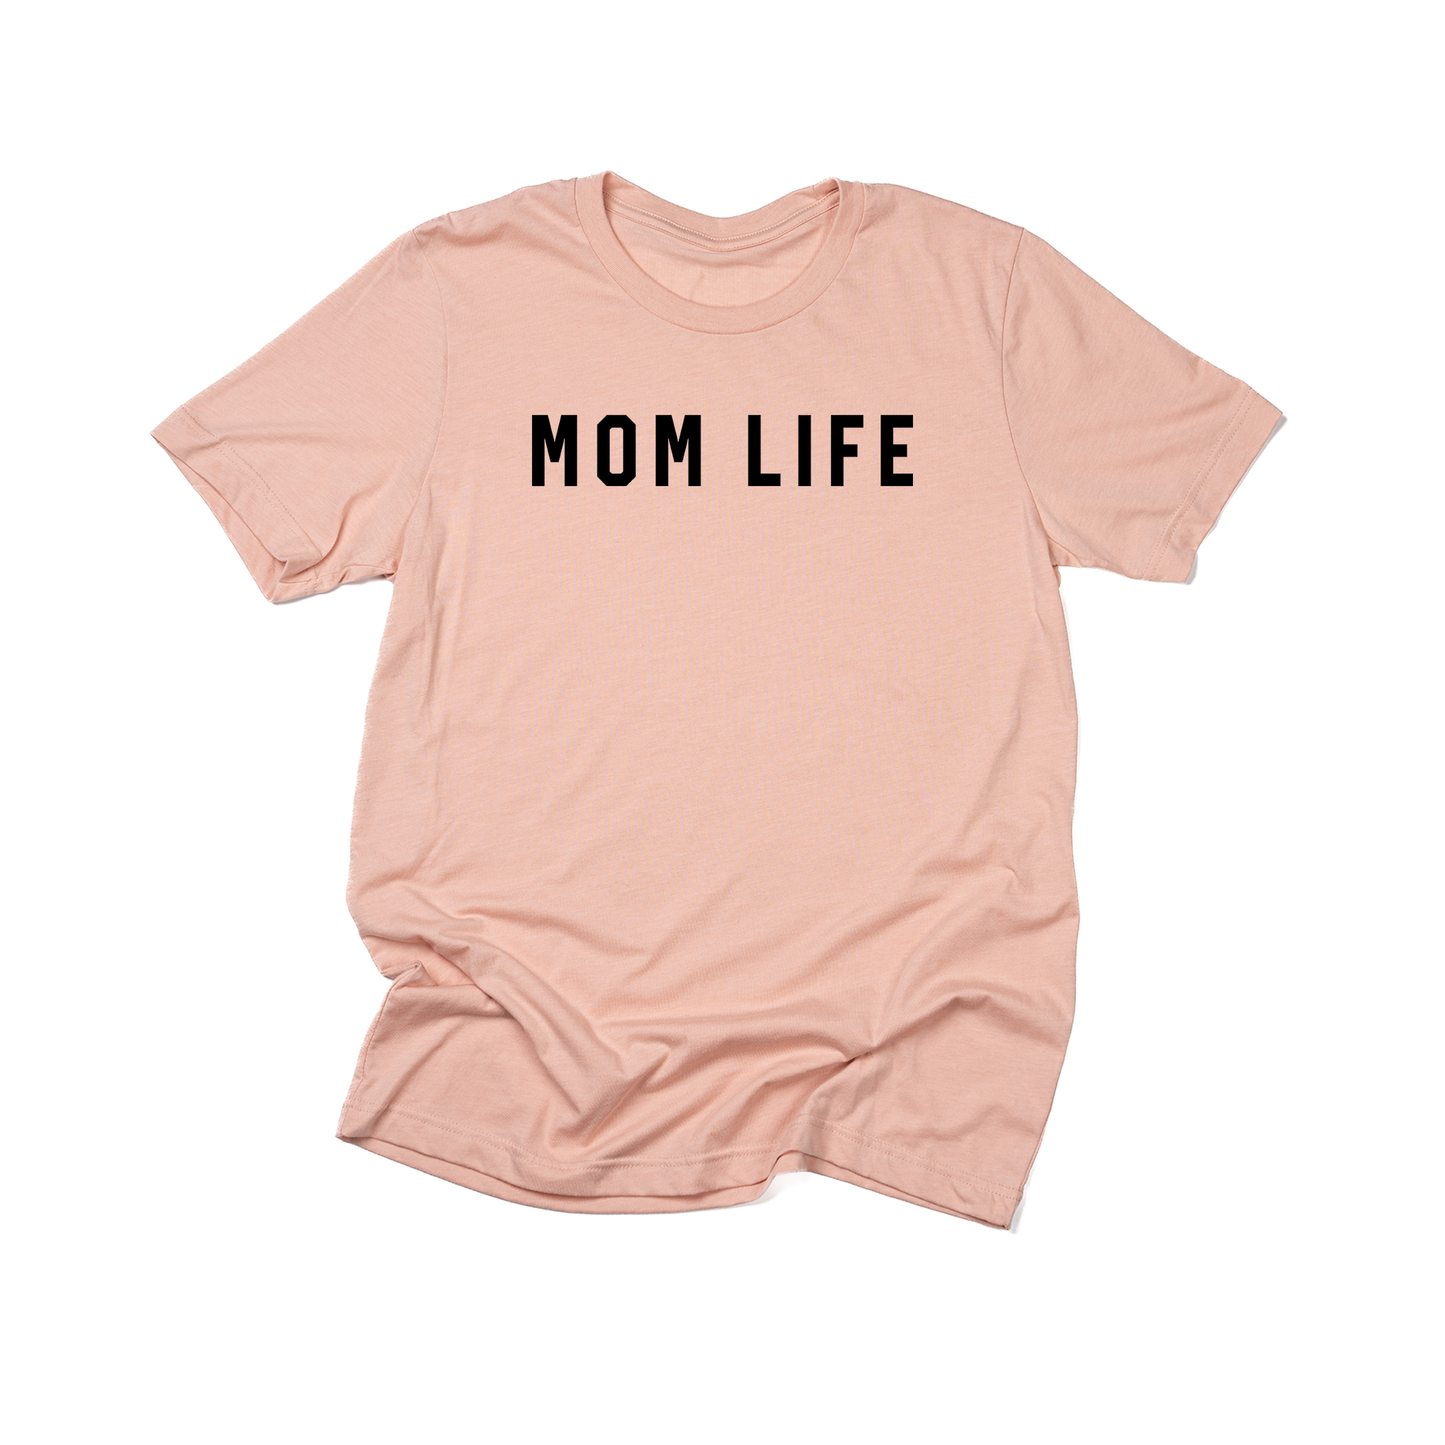 Mom Life (Across Front, Black) - Tee (Peach)